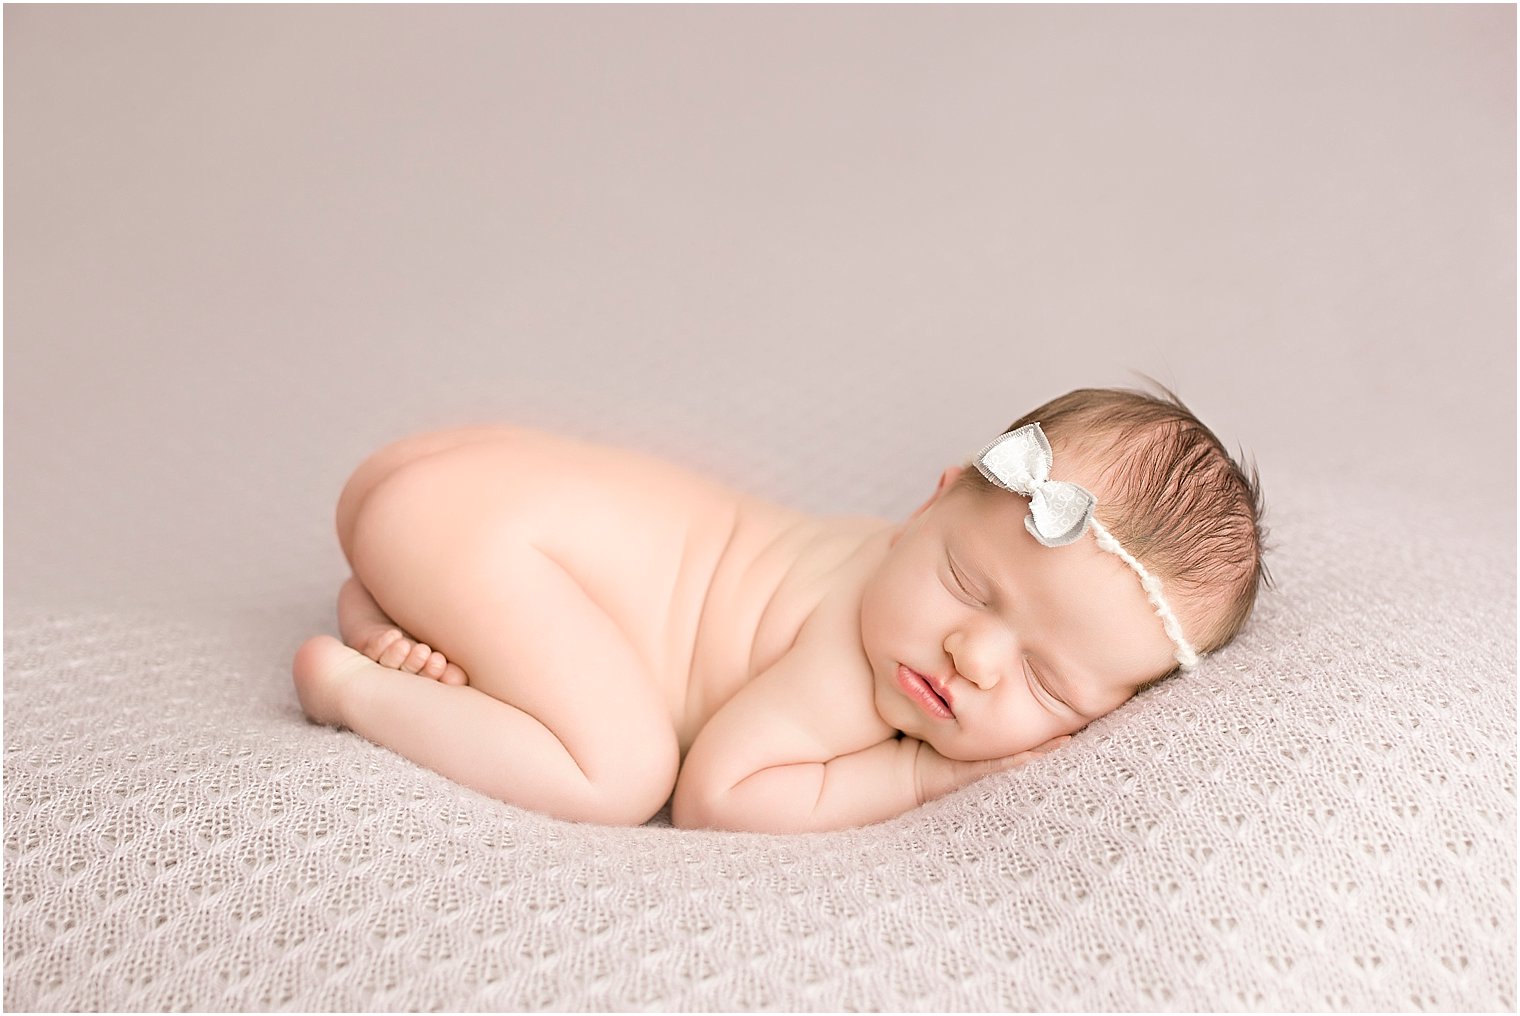 Newborn baby girl in tushie up pose